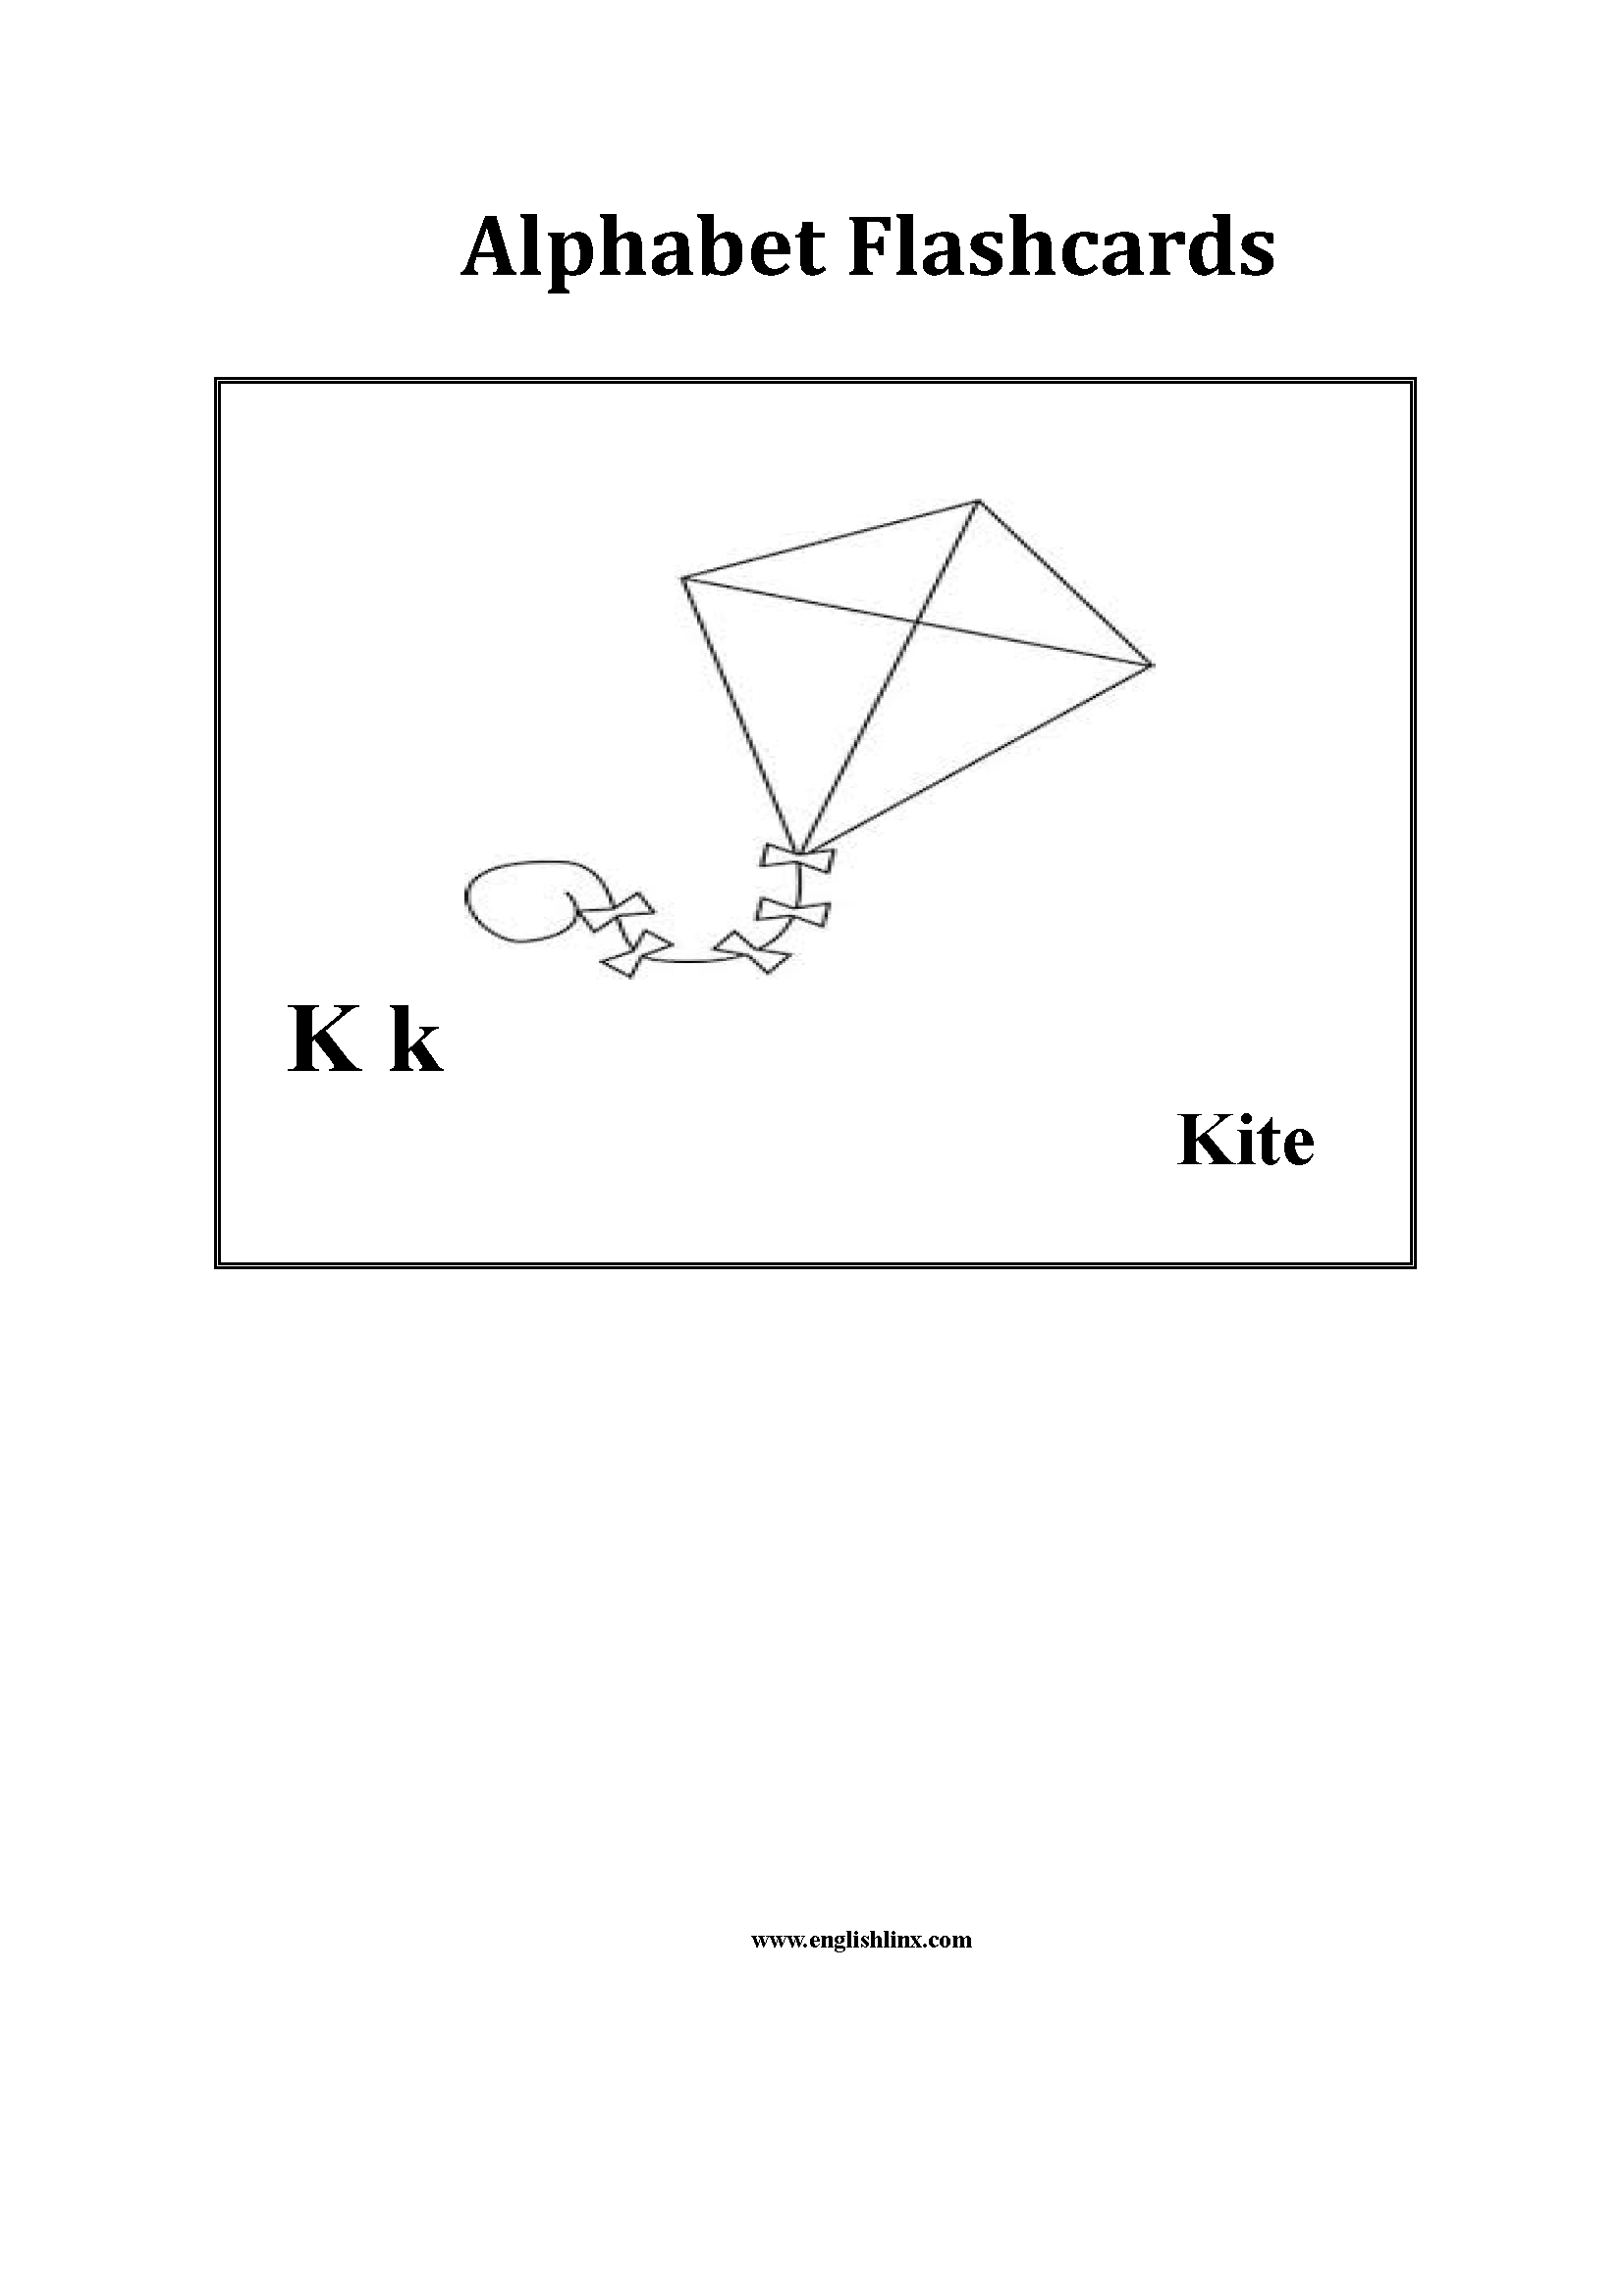 Letter K Alphabet Flashcard Worksheet